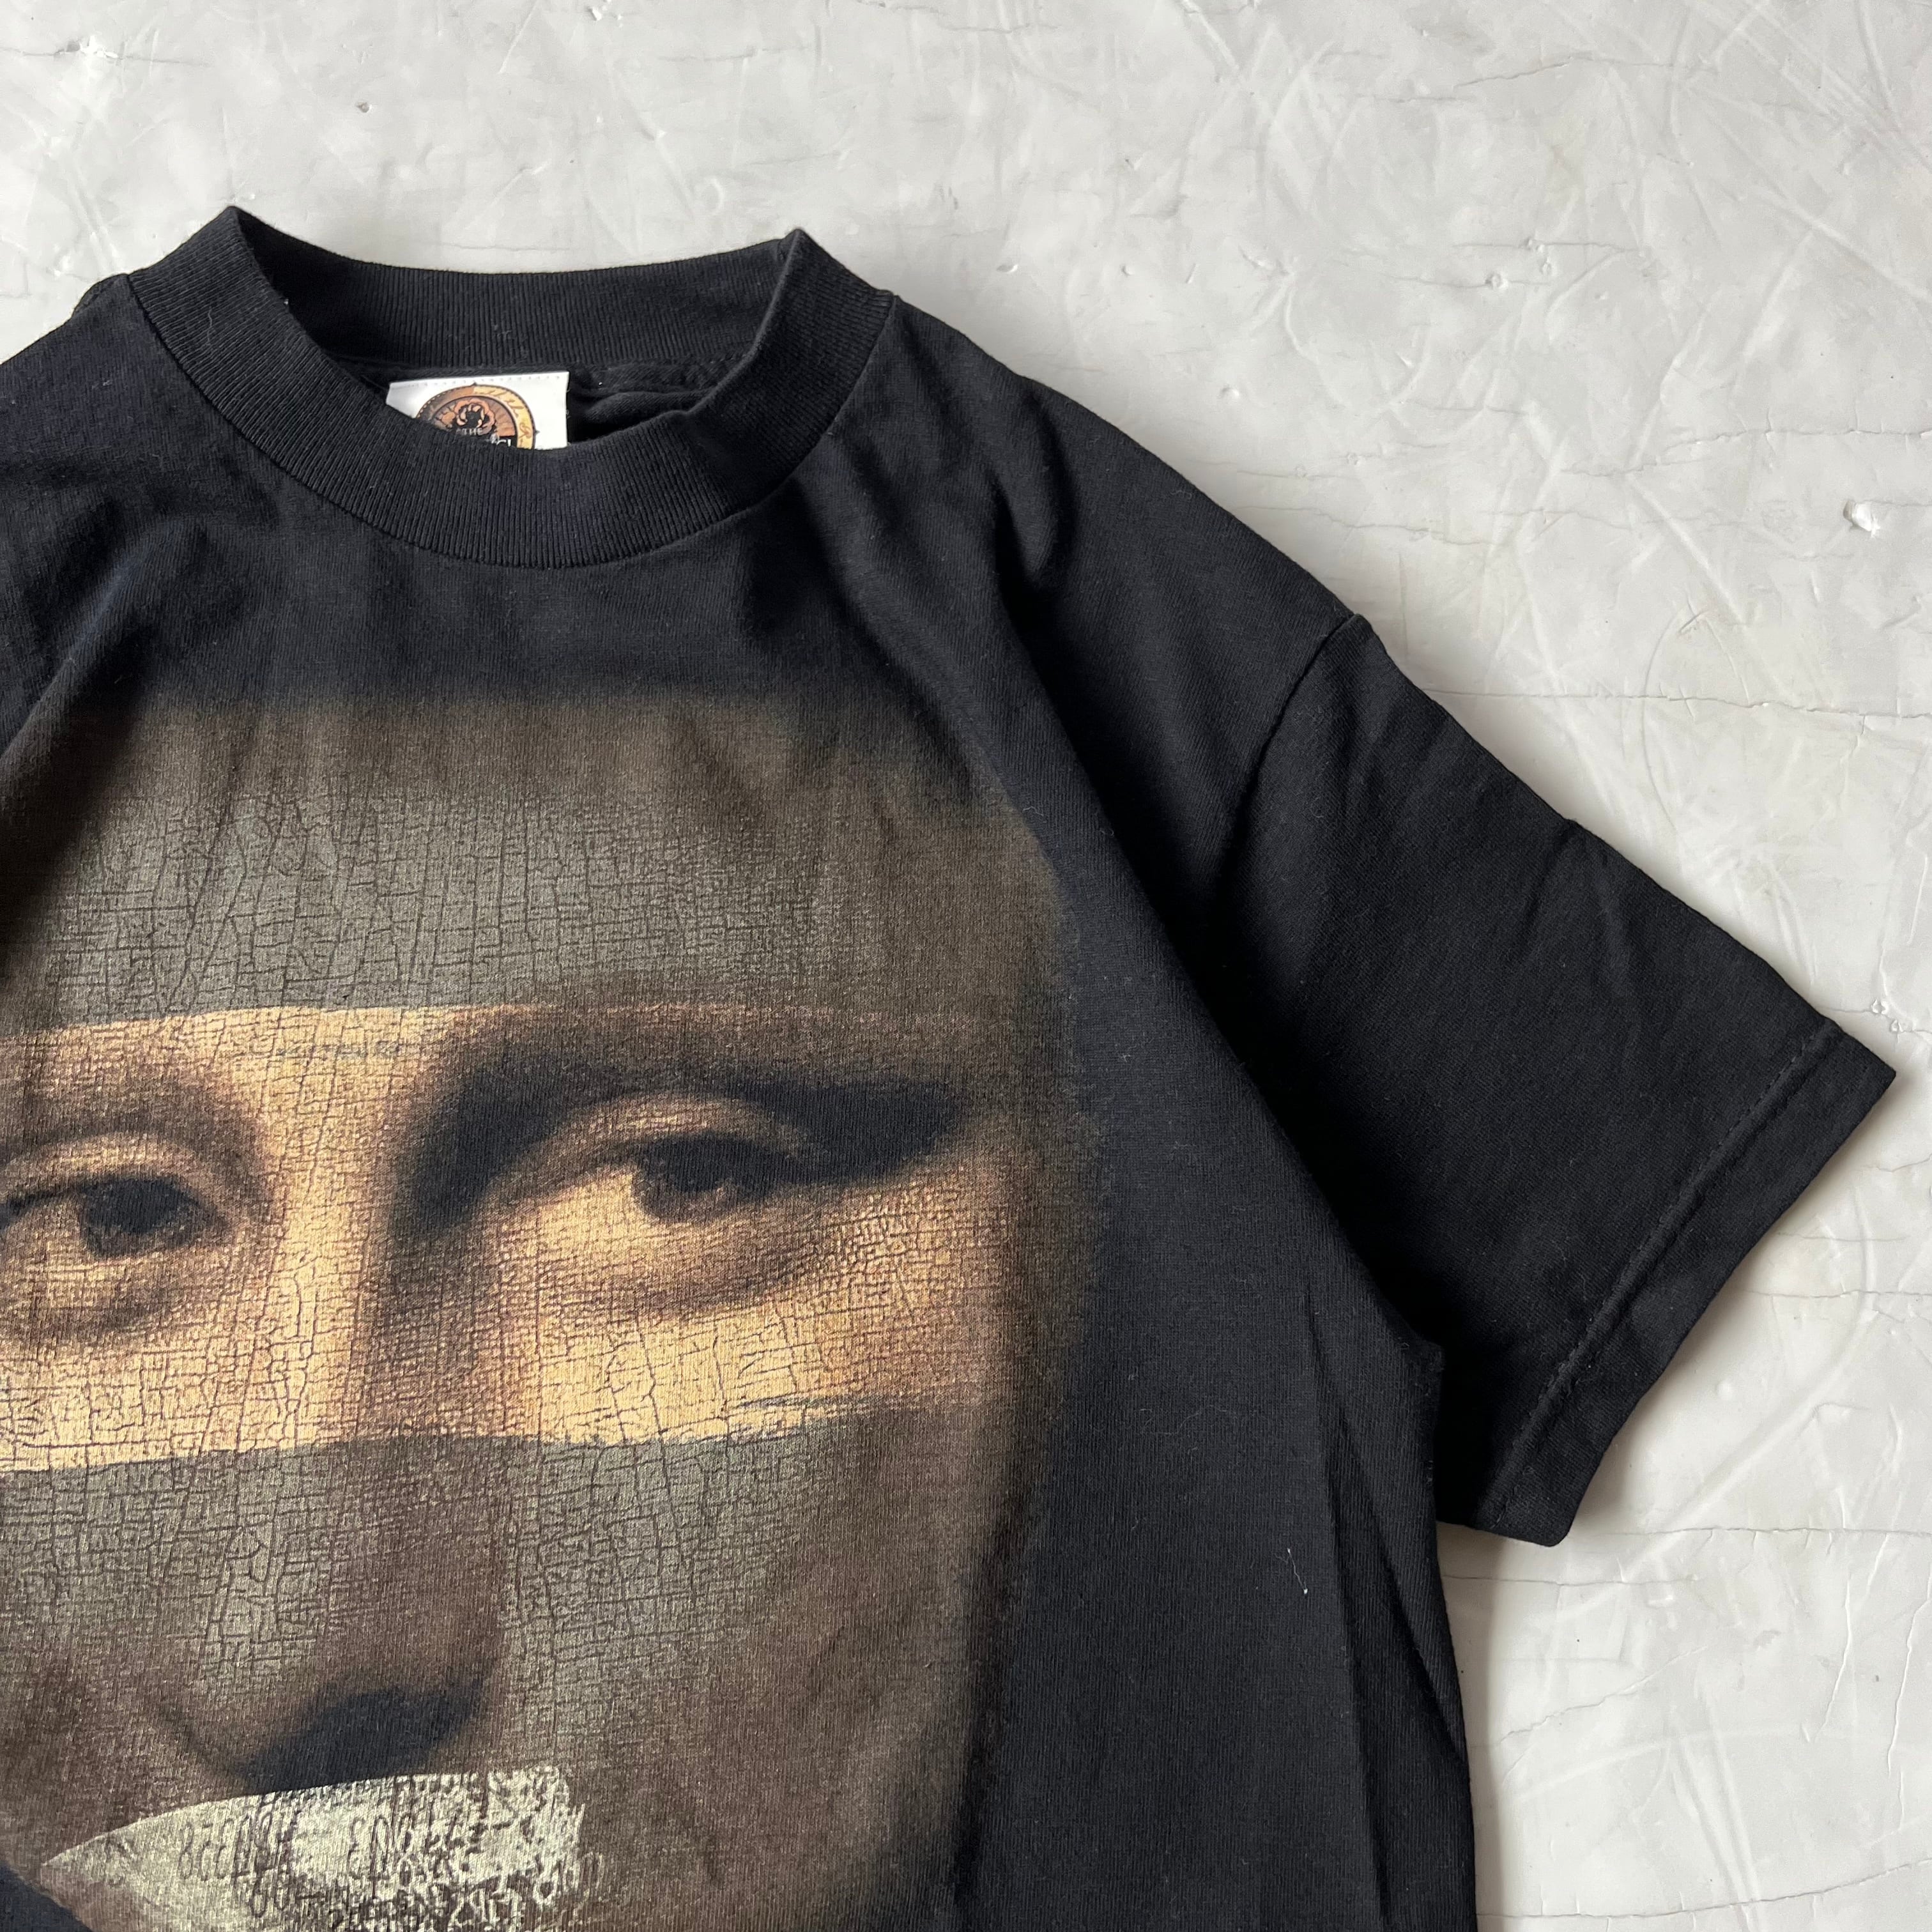 00s “ The Da Vinci Code” oficial Tee ダヴィンチコード tシャツ ...